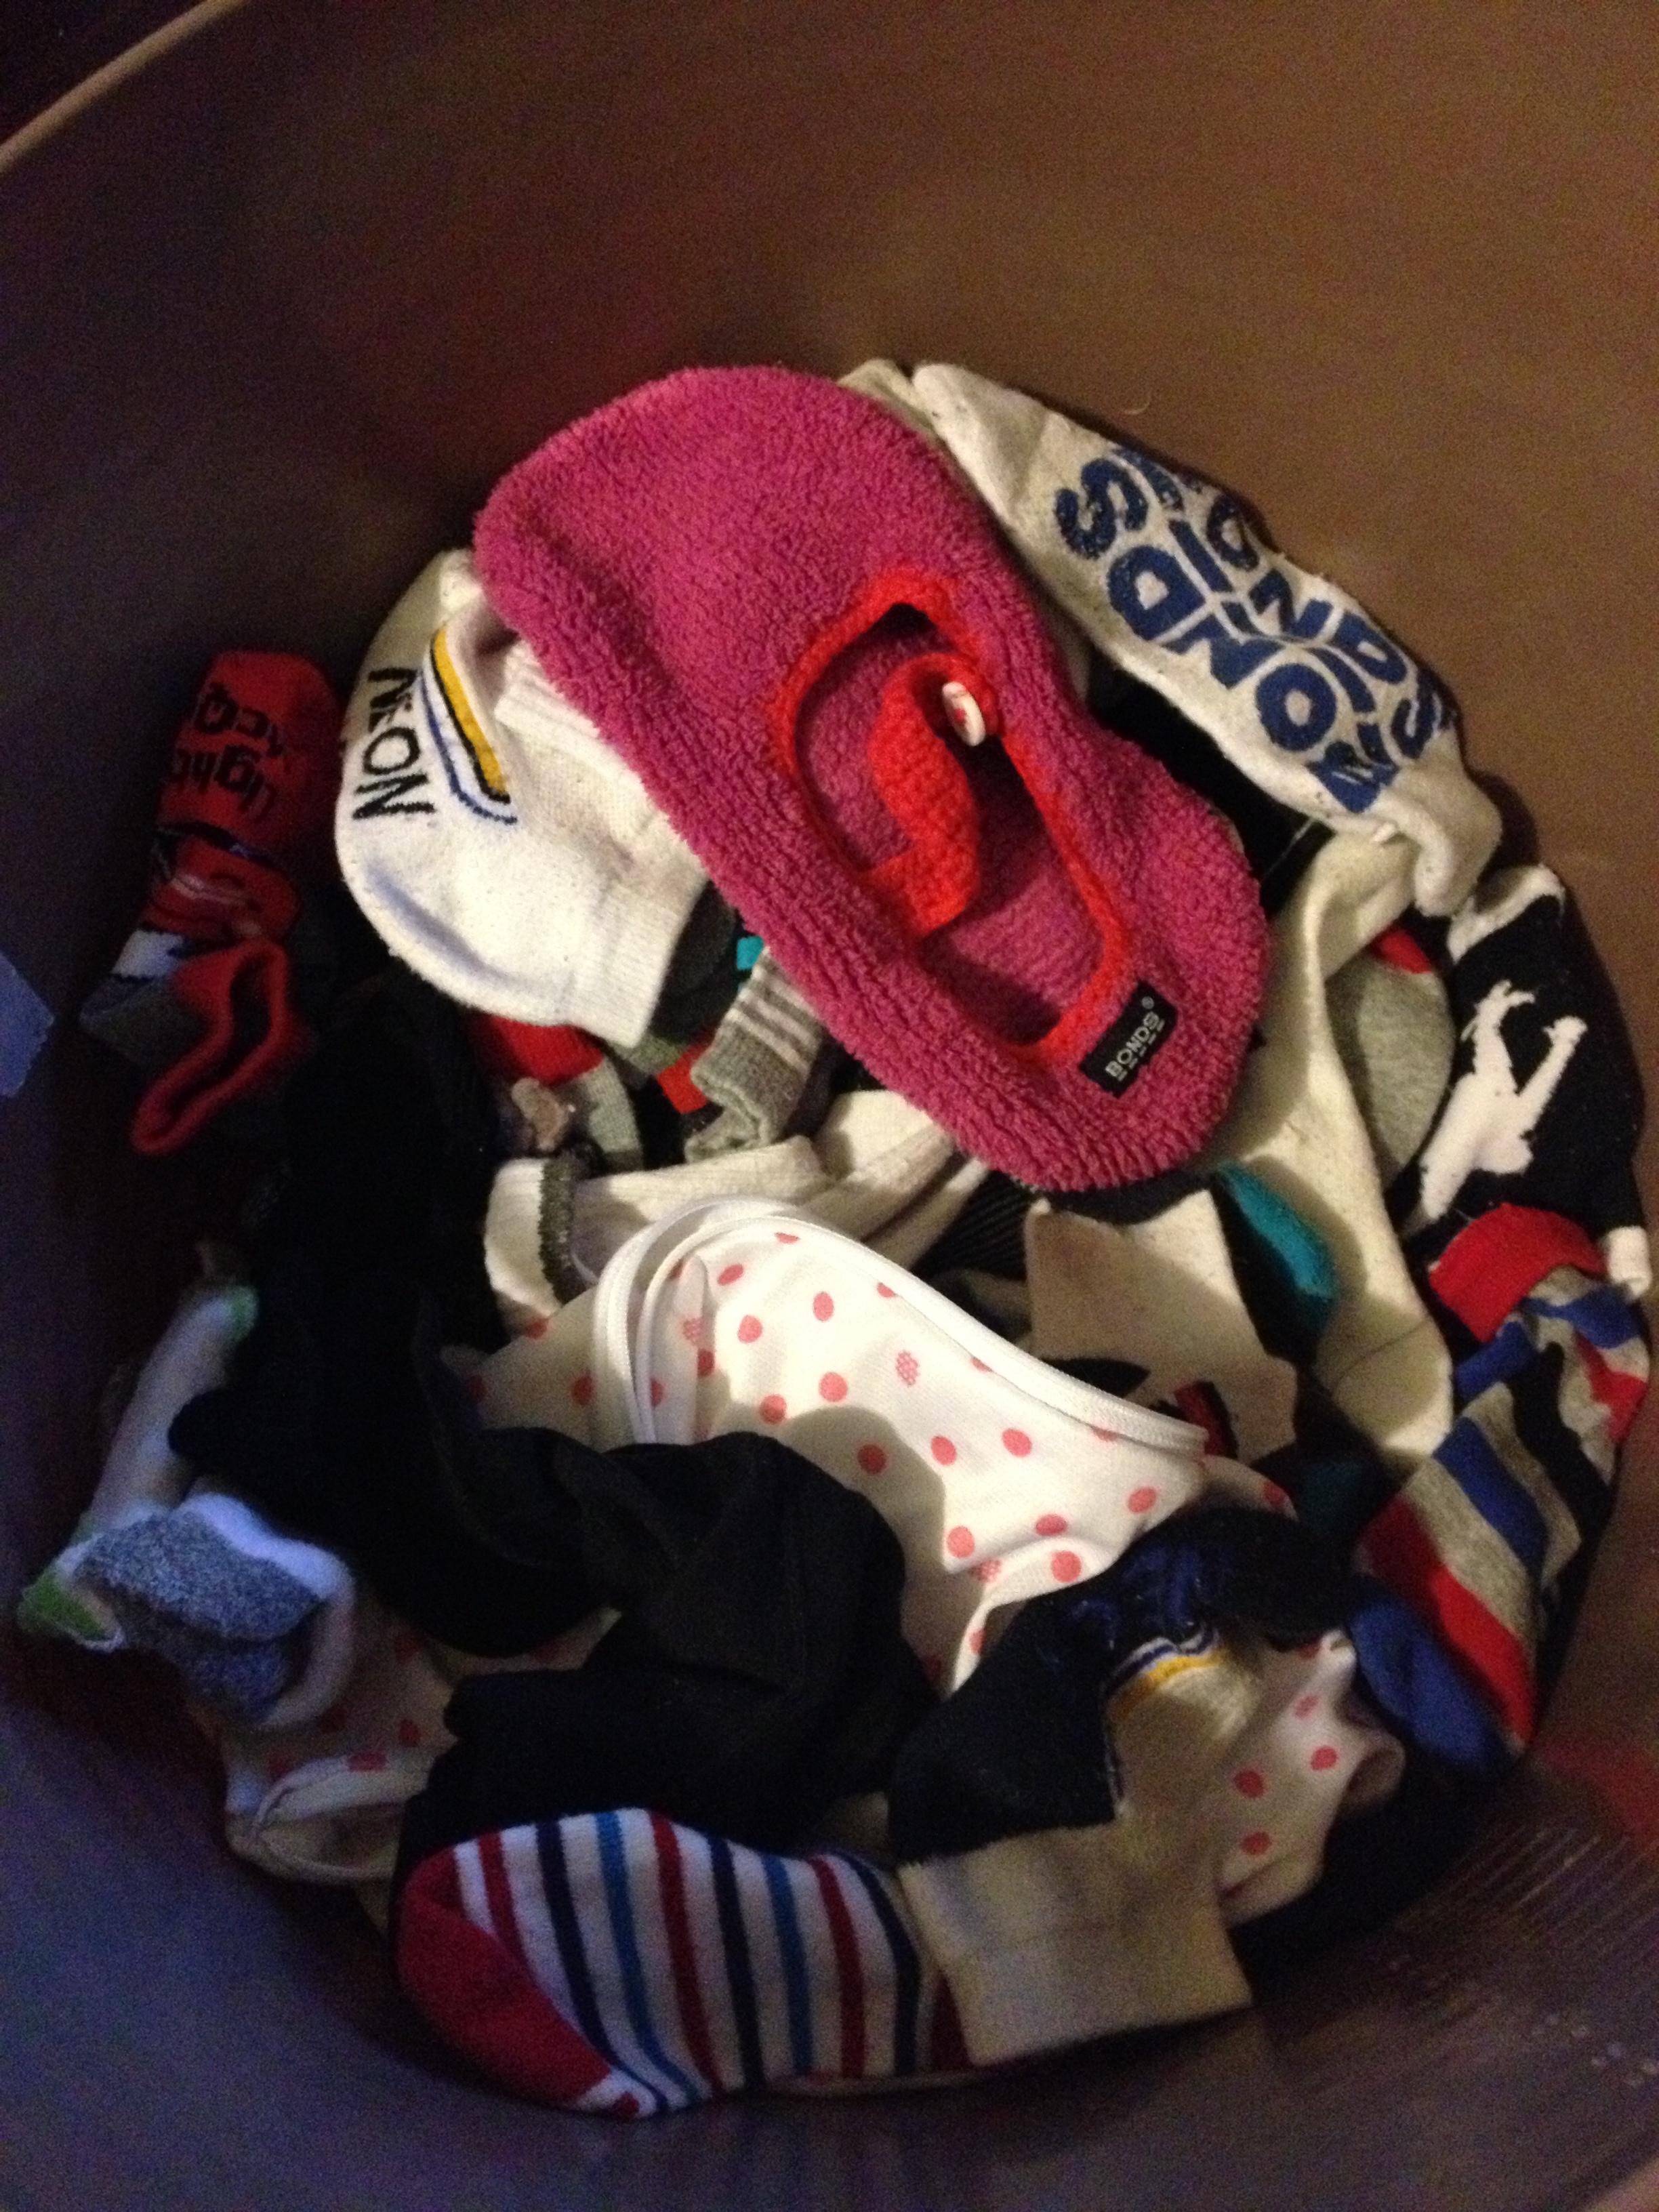 Bottomless laundry basket